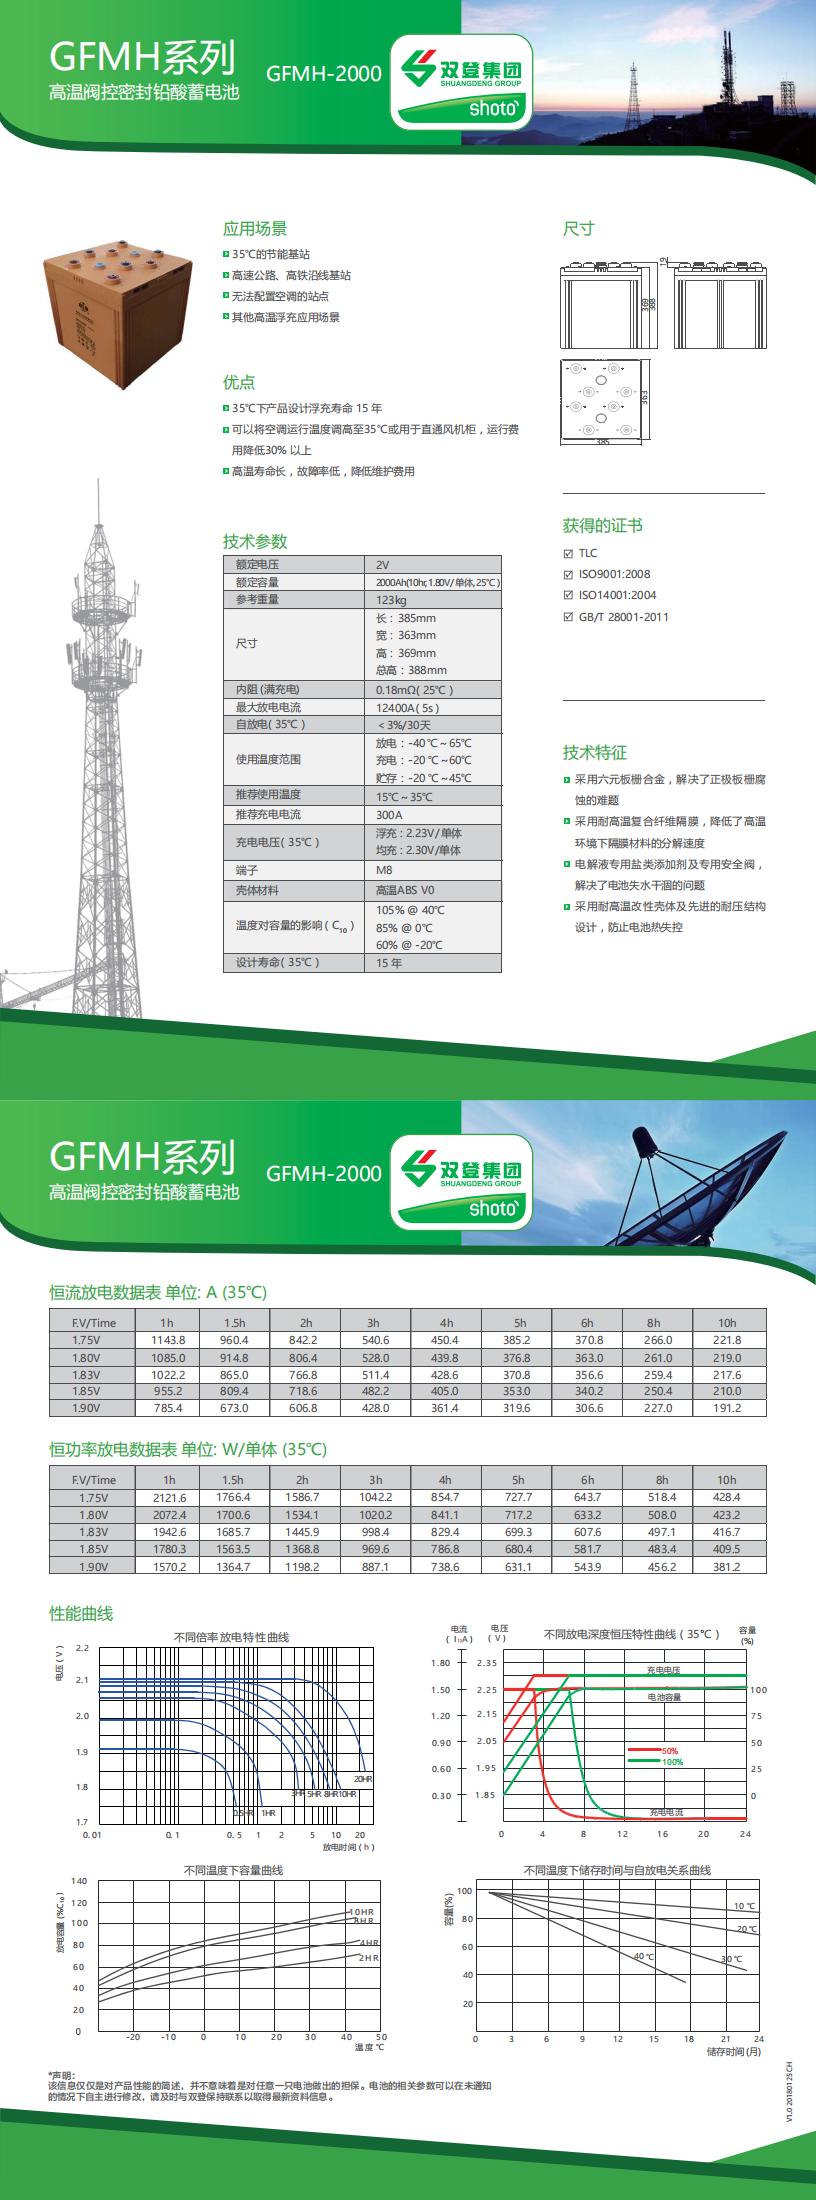 GFMH-2000中文_00.jpg